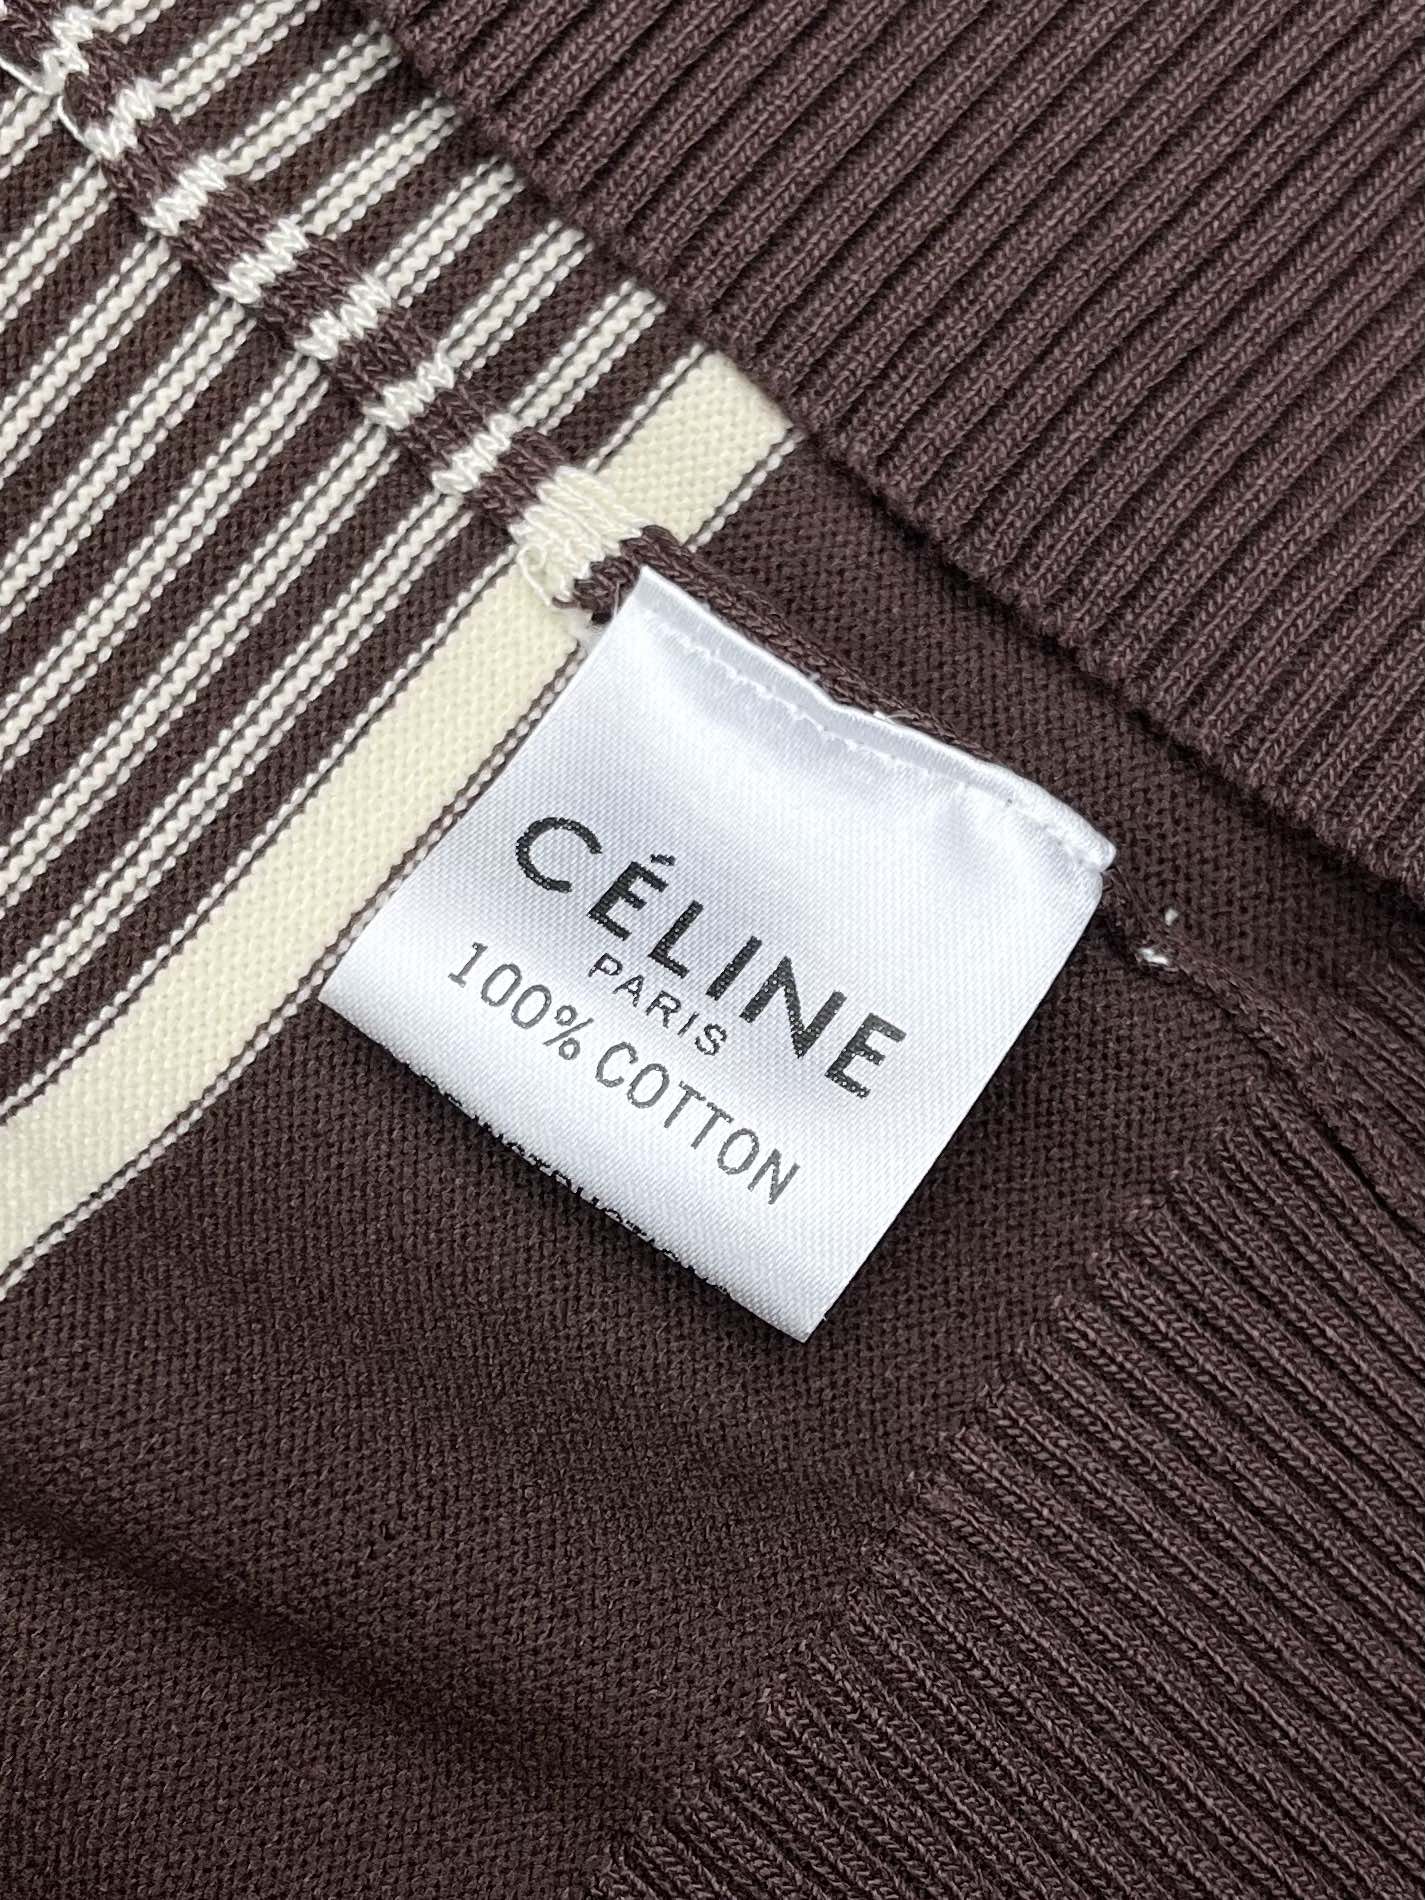 Celin*24ss新款毛衣针织短袖超经典设计简约没有任何多余累赘感衣橱不可缺少的一件百搭单品采用优质羊